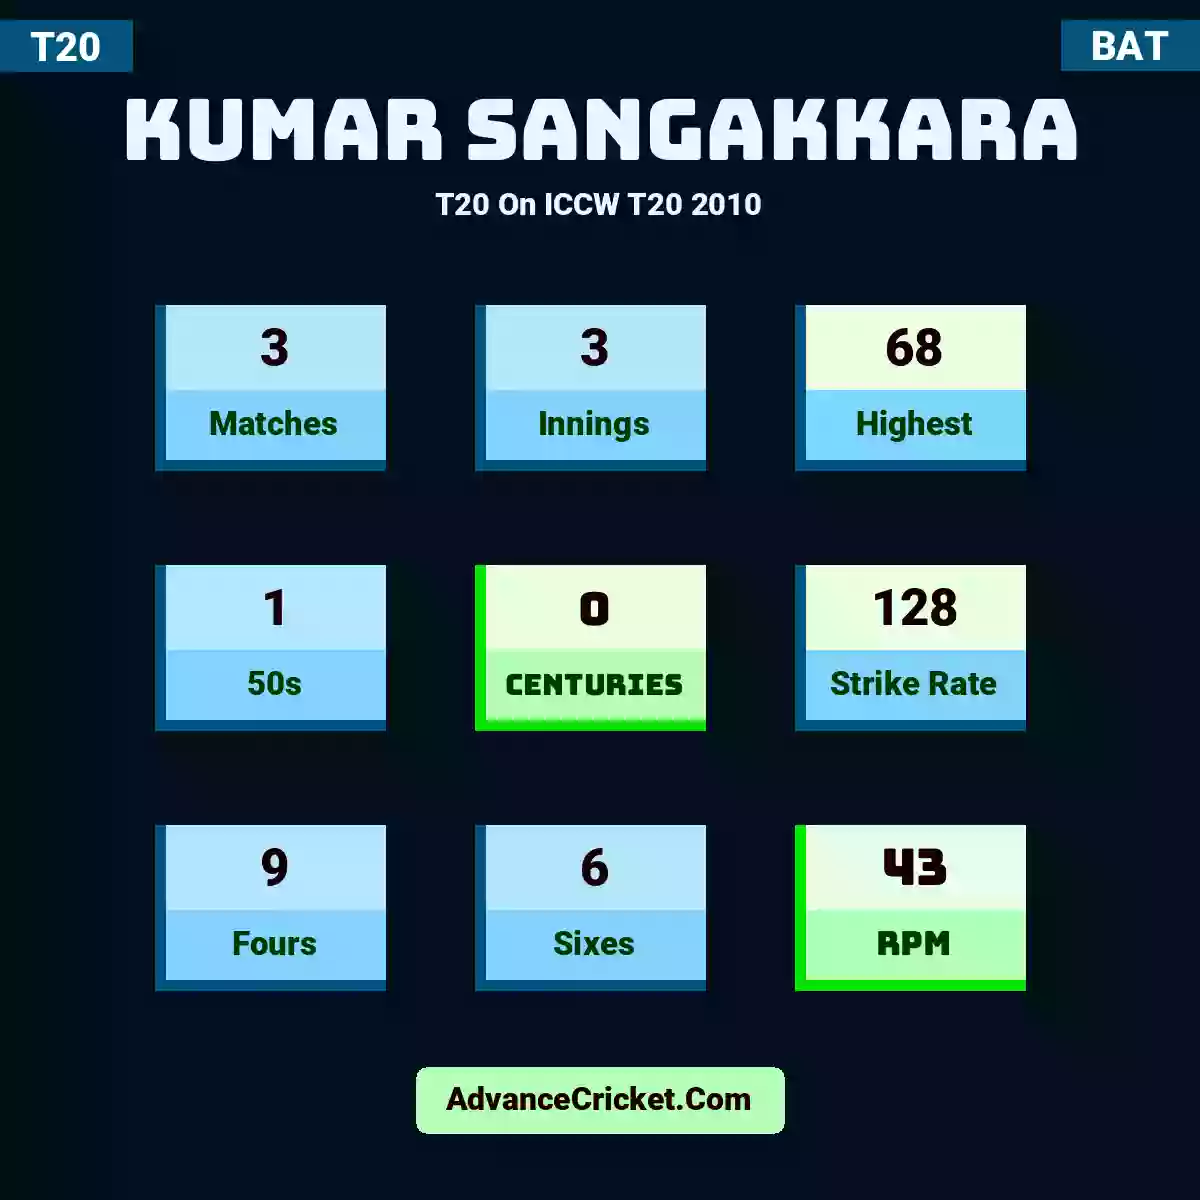 Kumar Sangakkara T20  On ICCW T20 2010, Kumar Sangakkara played 3 matches, scored 68 runs as highest, 1 half-centuries, and 0 centuries, with a strike rate of 128. K.Sangakkara hit 9 fours and 6 sixes, with an RPM of 43.